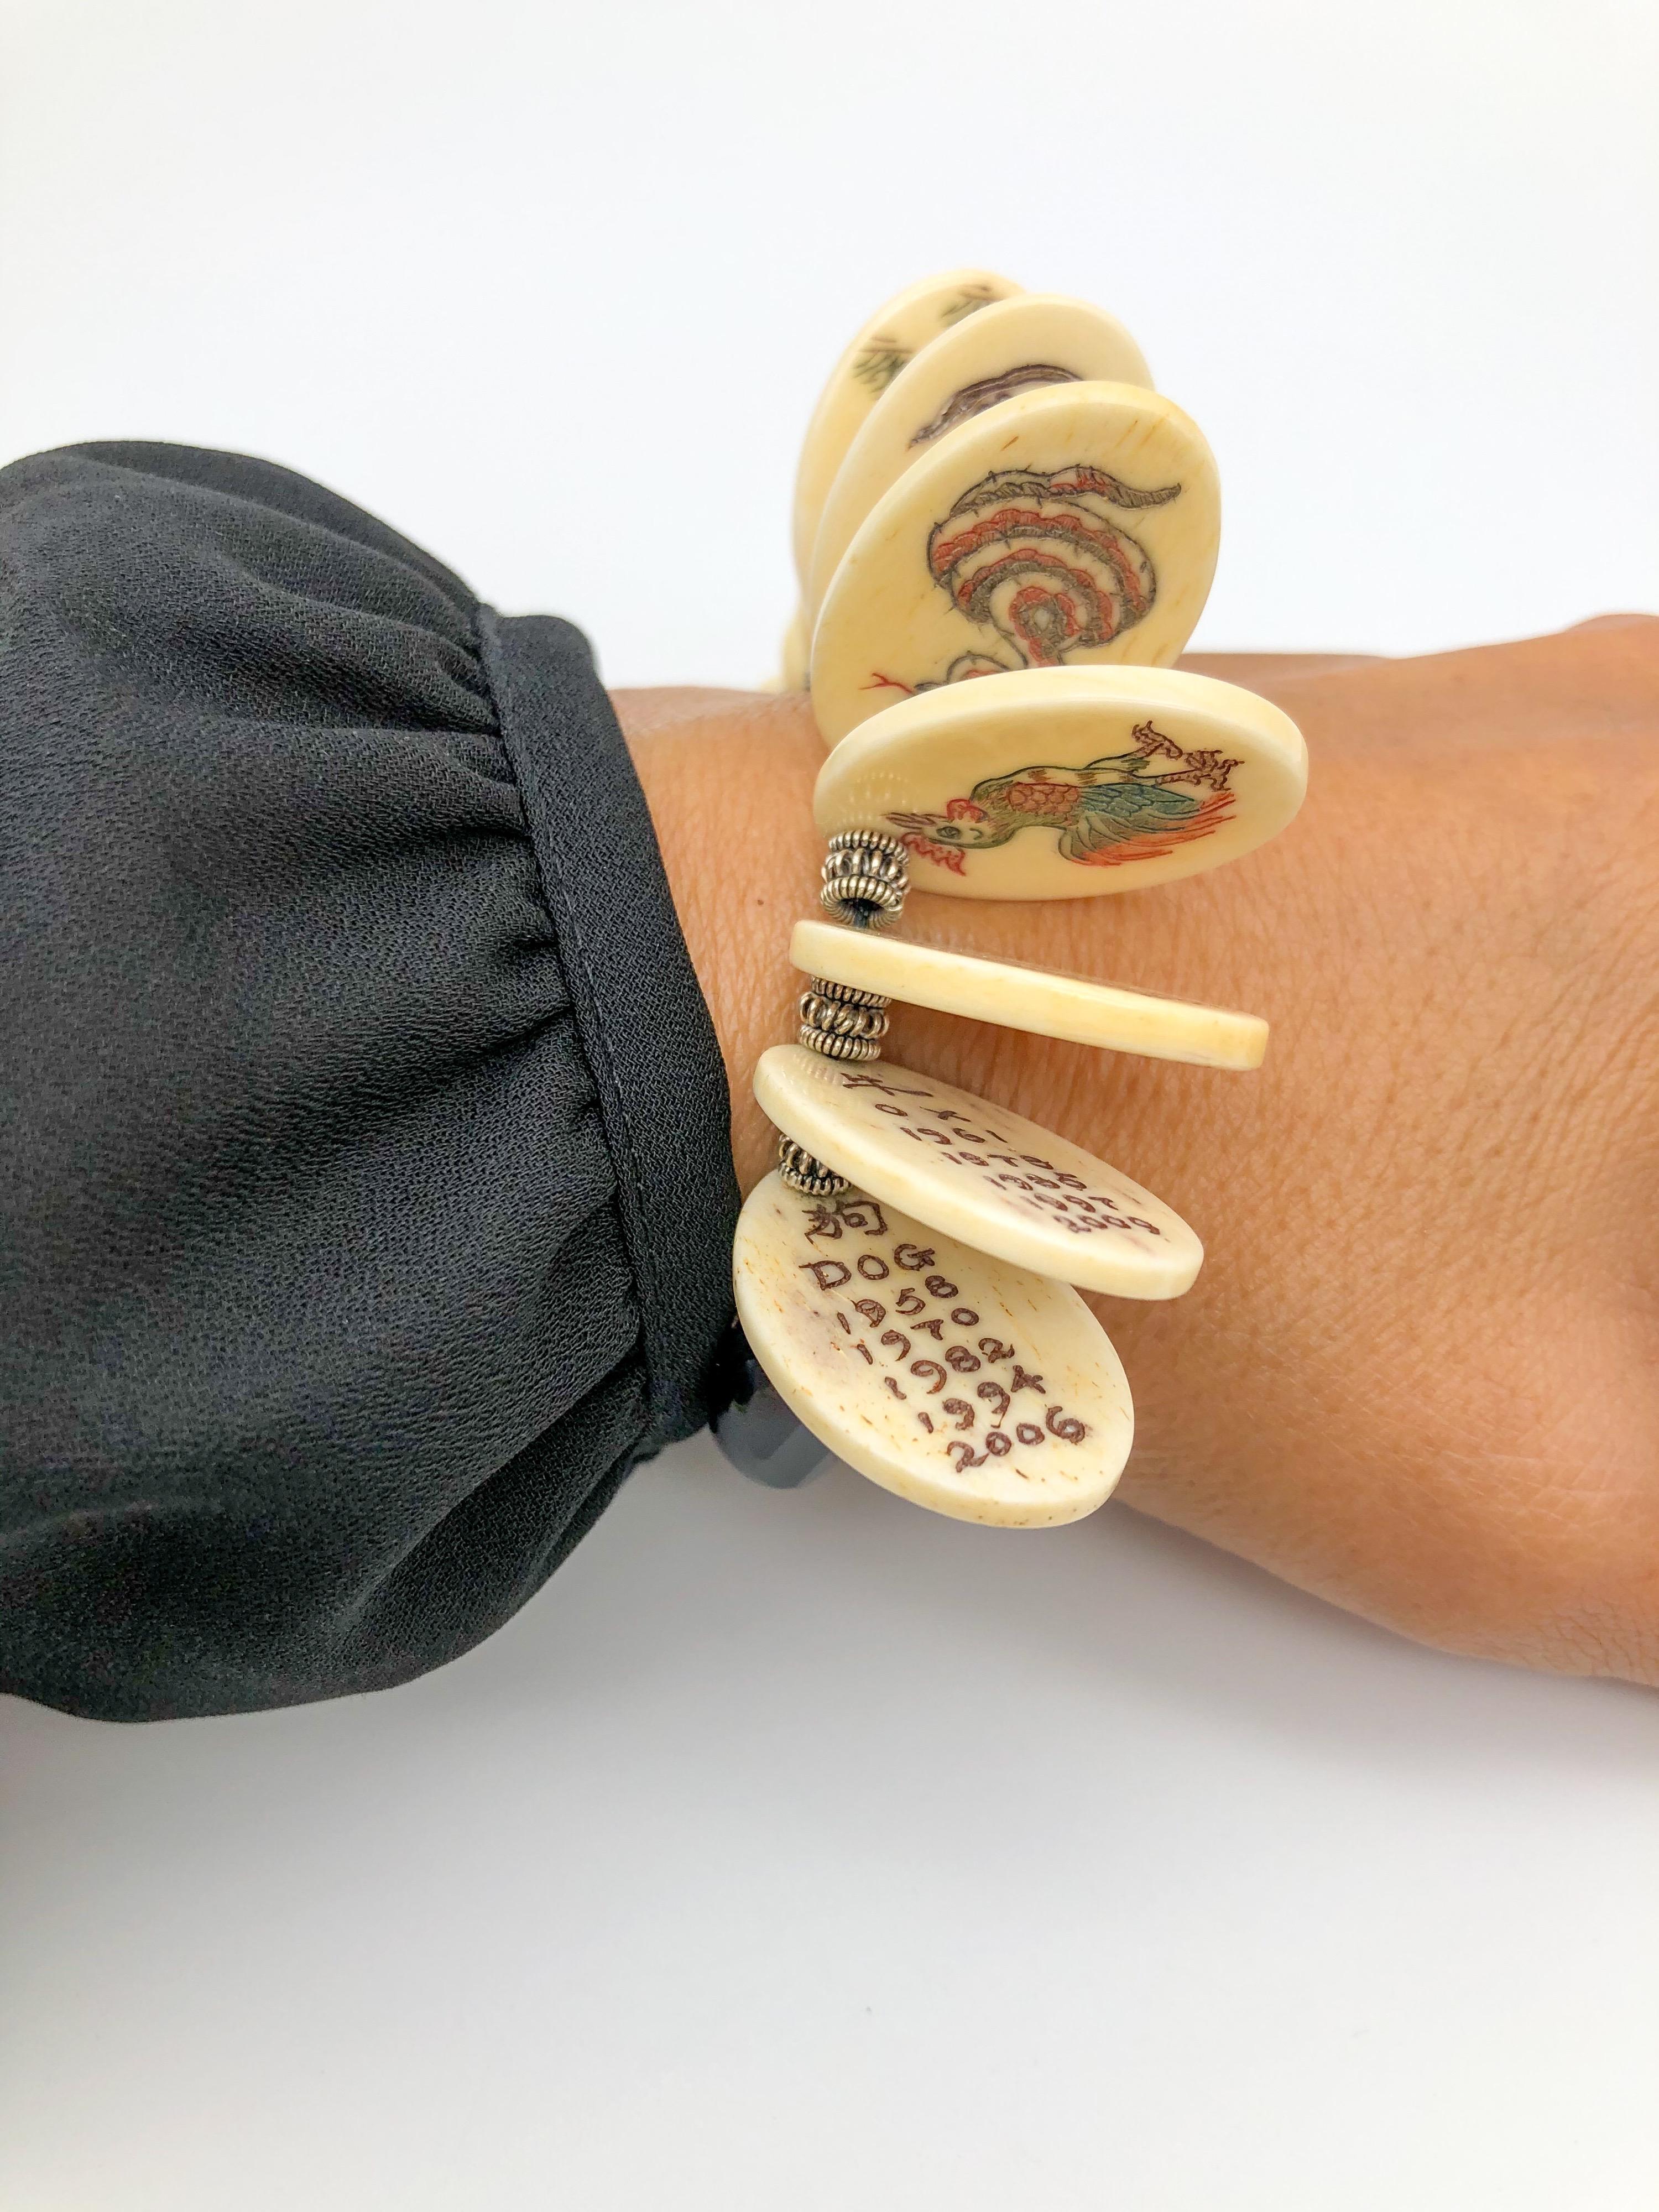 A.Jeschel Chinesisches Zodiac Armband handbemalt mit Onyxperlen im Angebot 1